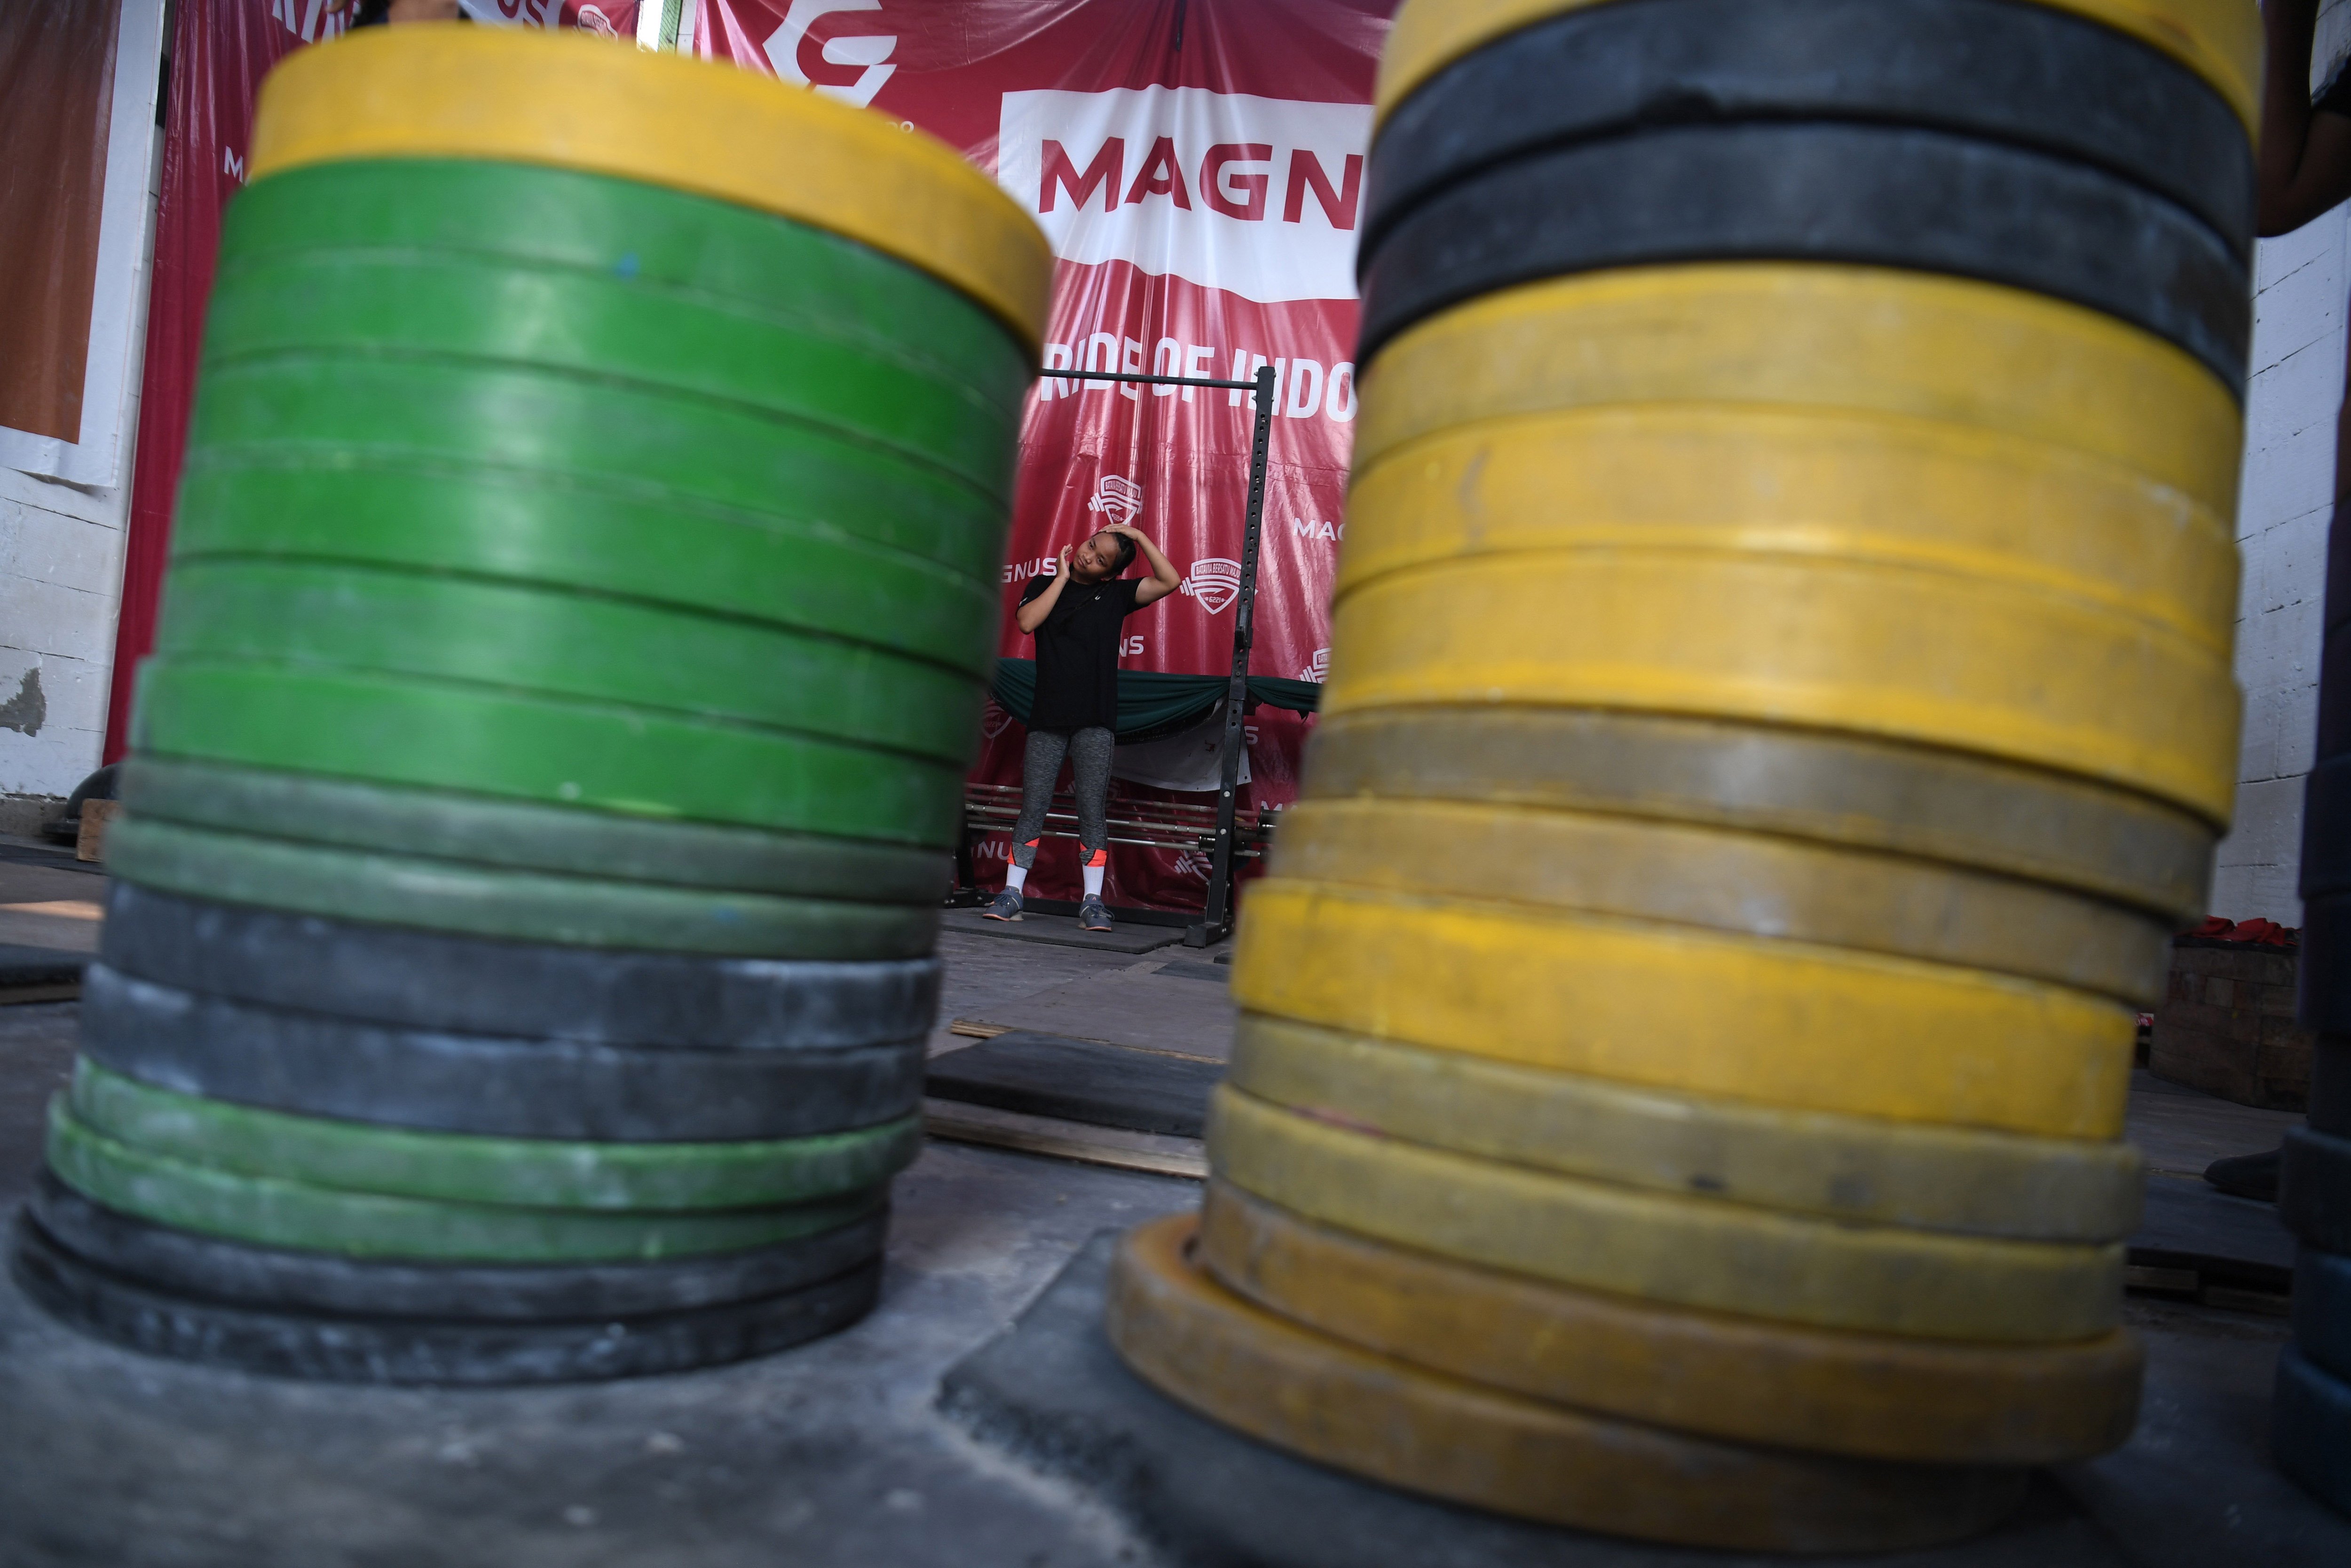 Seorang lifter muda melakukan pemanasan di 6221 Weightlifting Academy, Parungpanjang, Bogor, Jawa Barat.